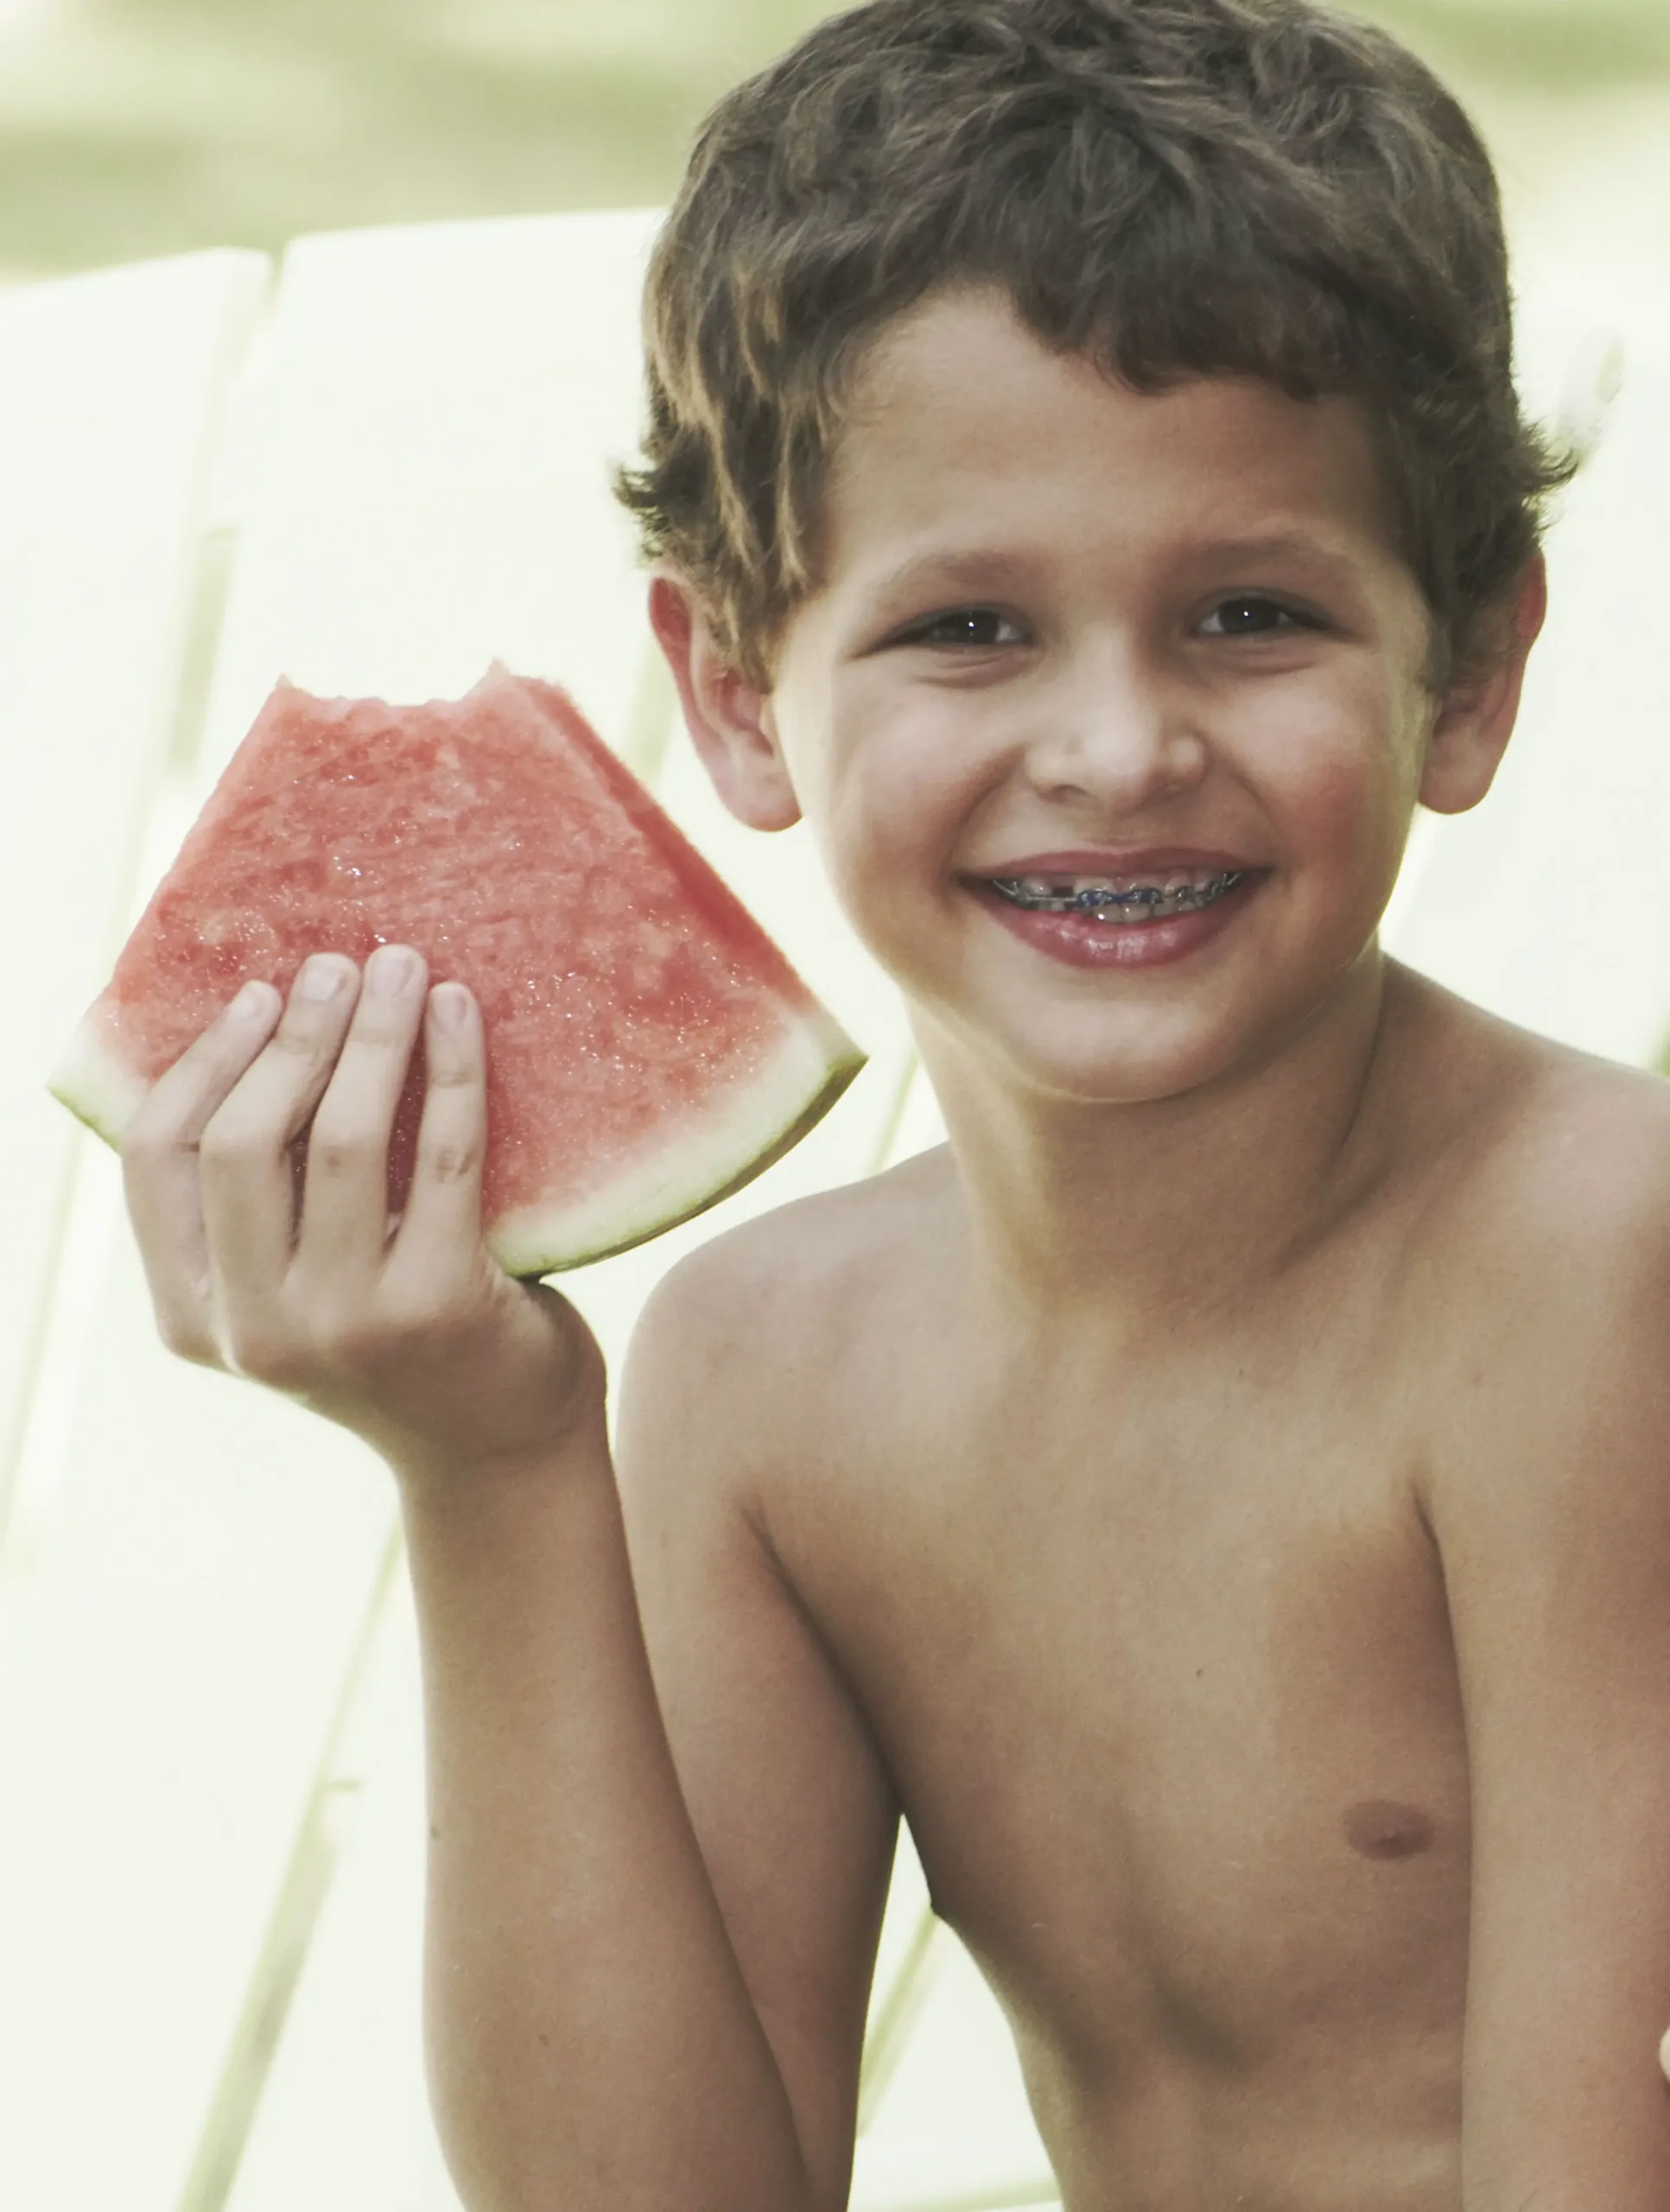 watermelon-recipe, kid-and-watermelon